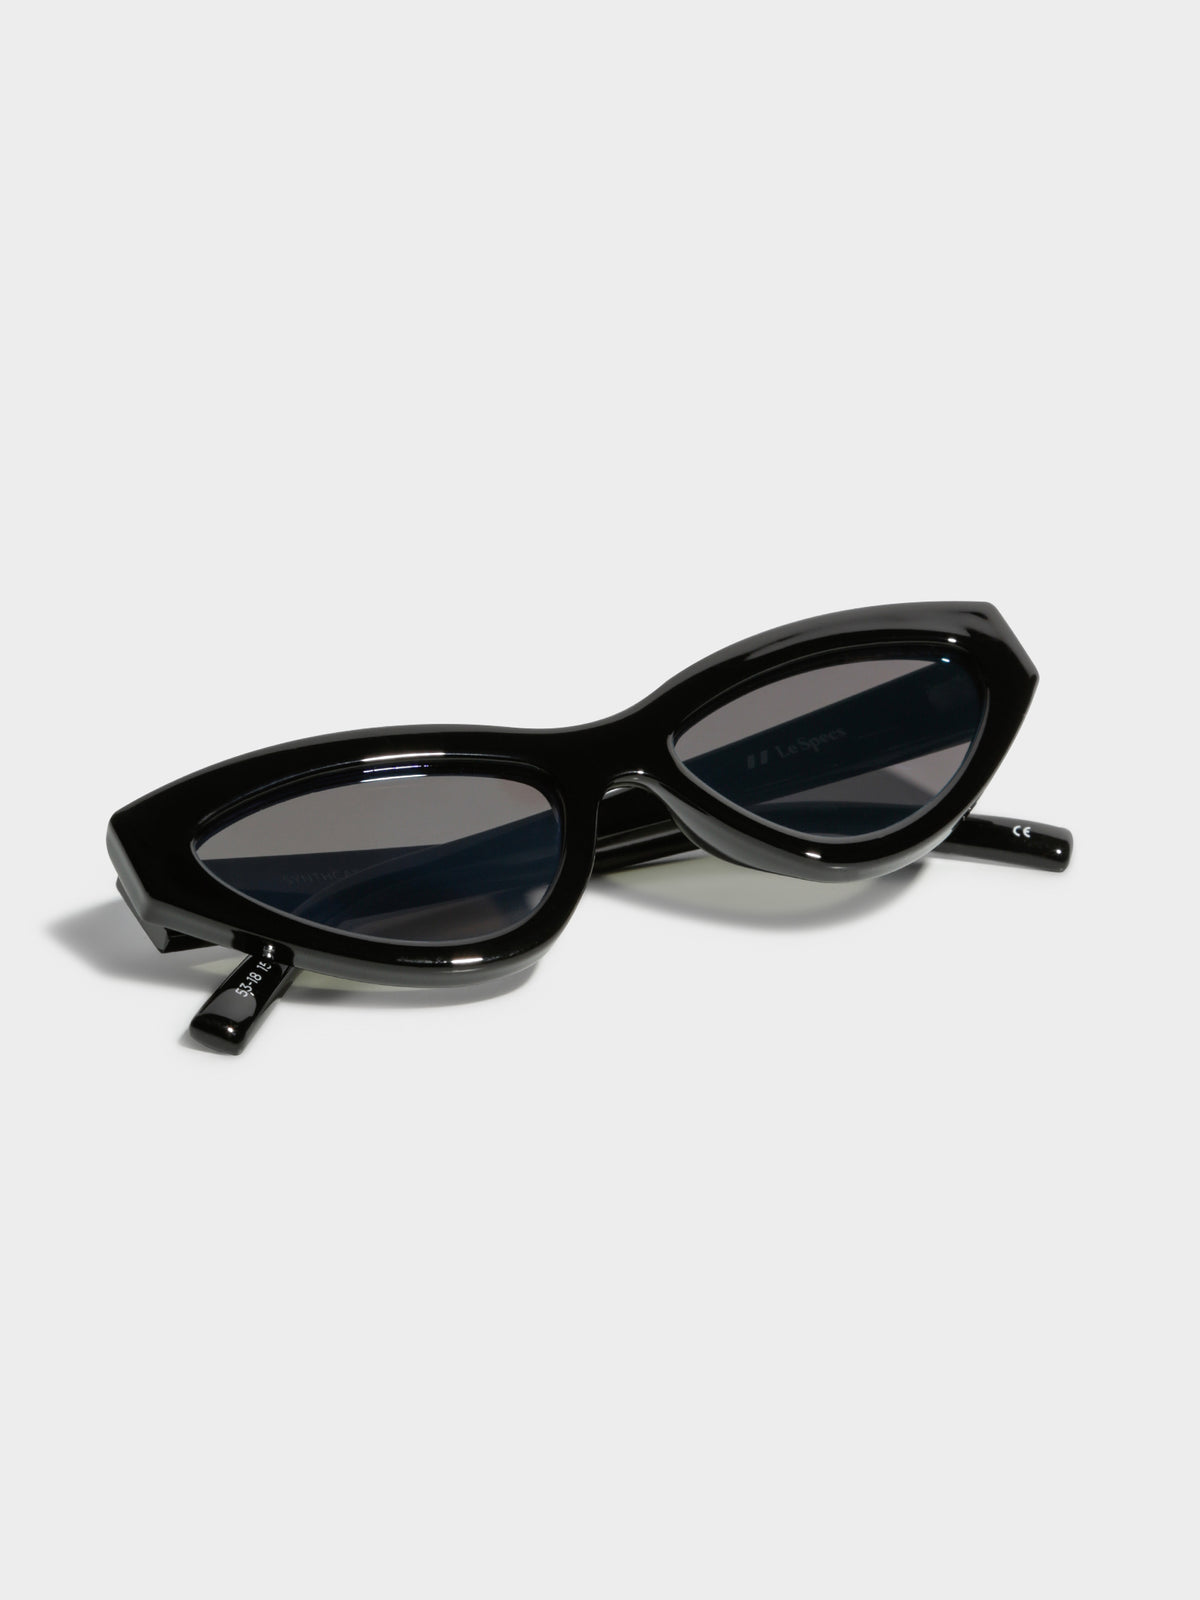 Synthcat Sunglasses in Black